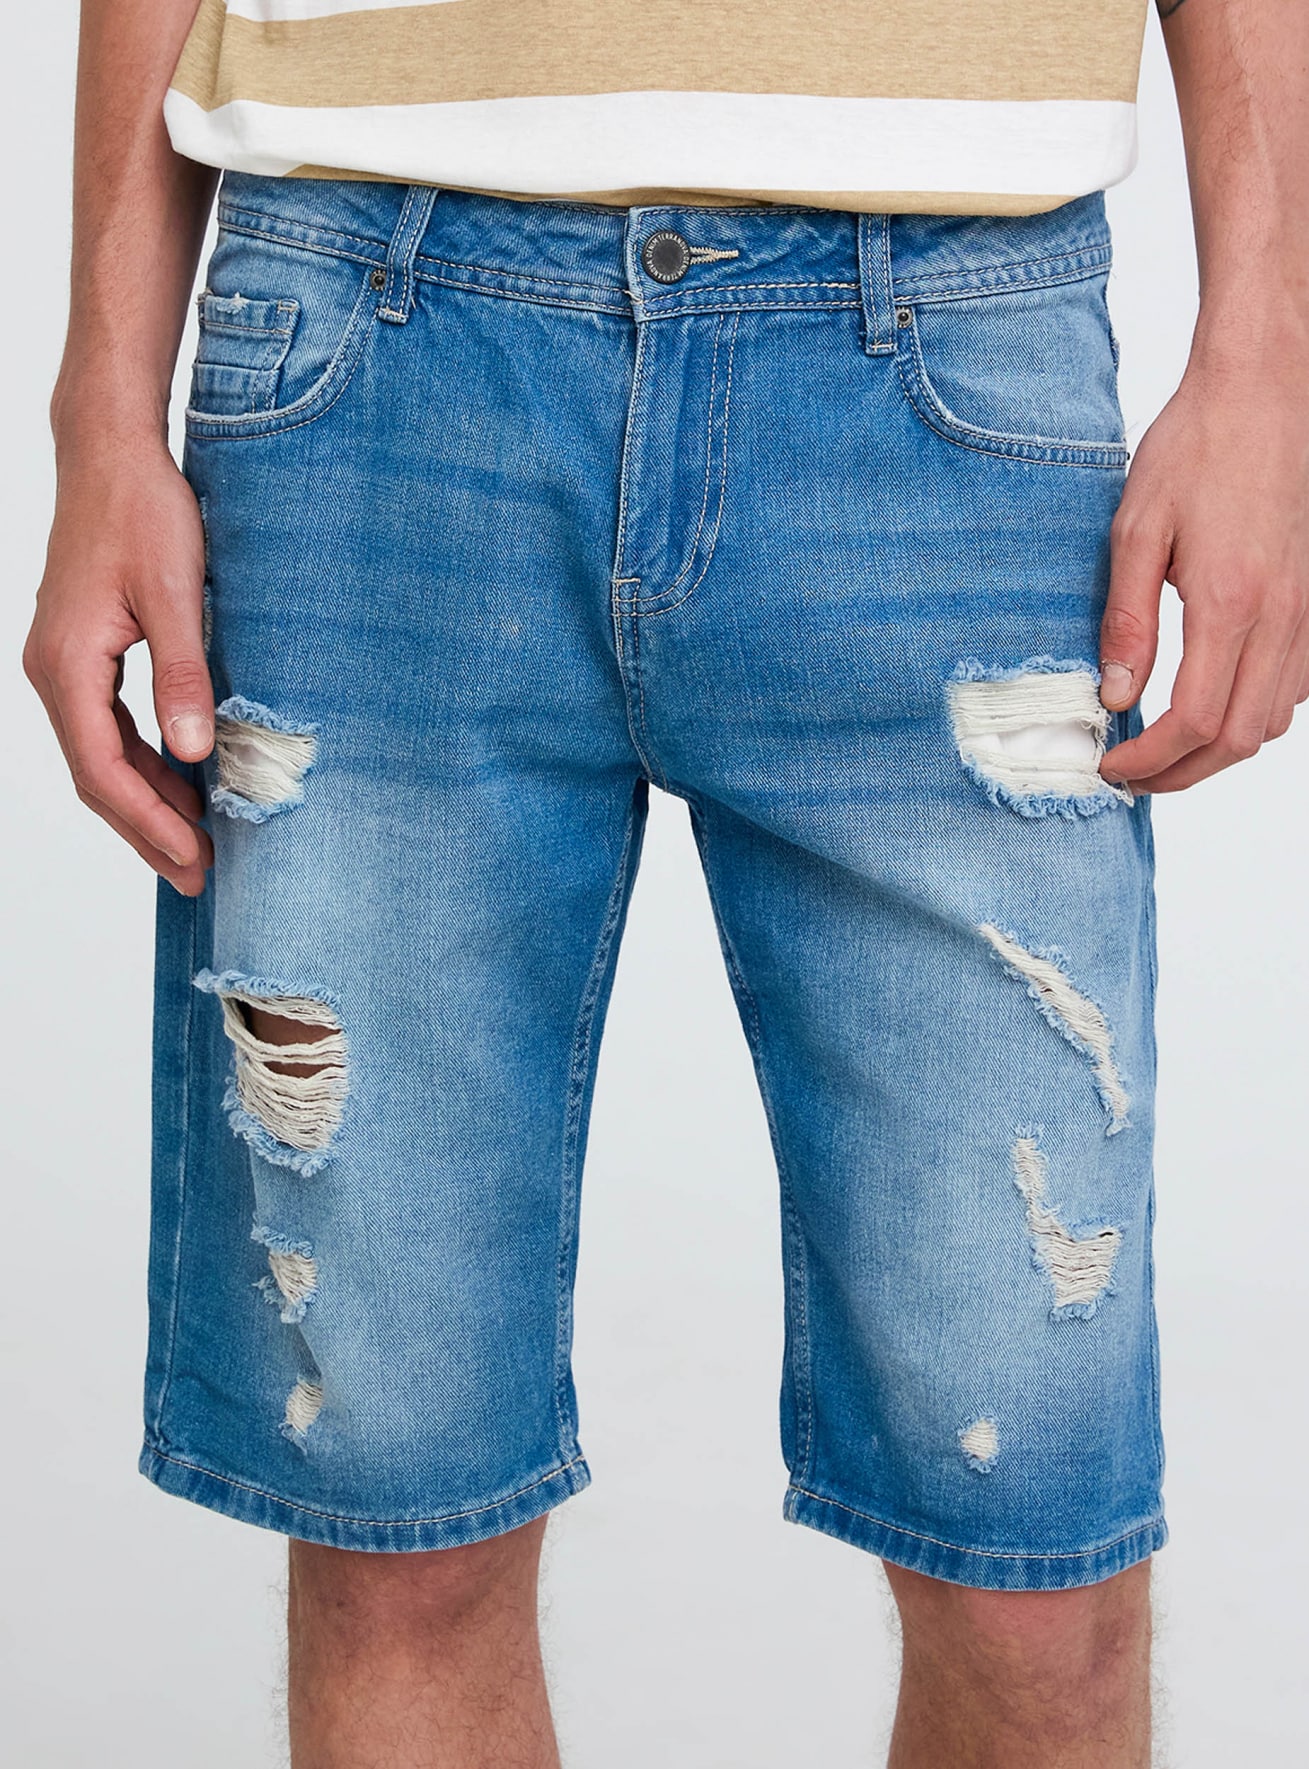 Pantalone Jeans Corto Uomo Terranova